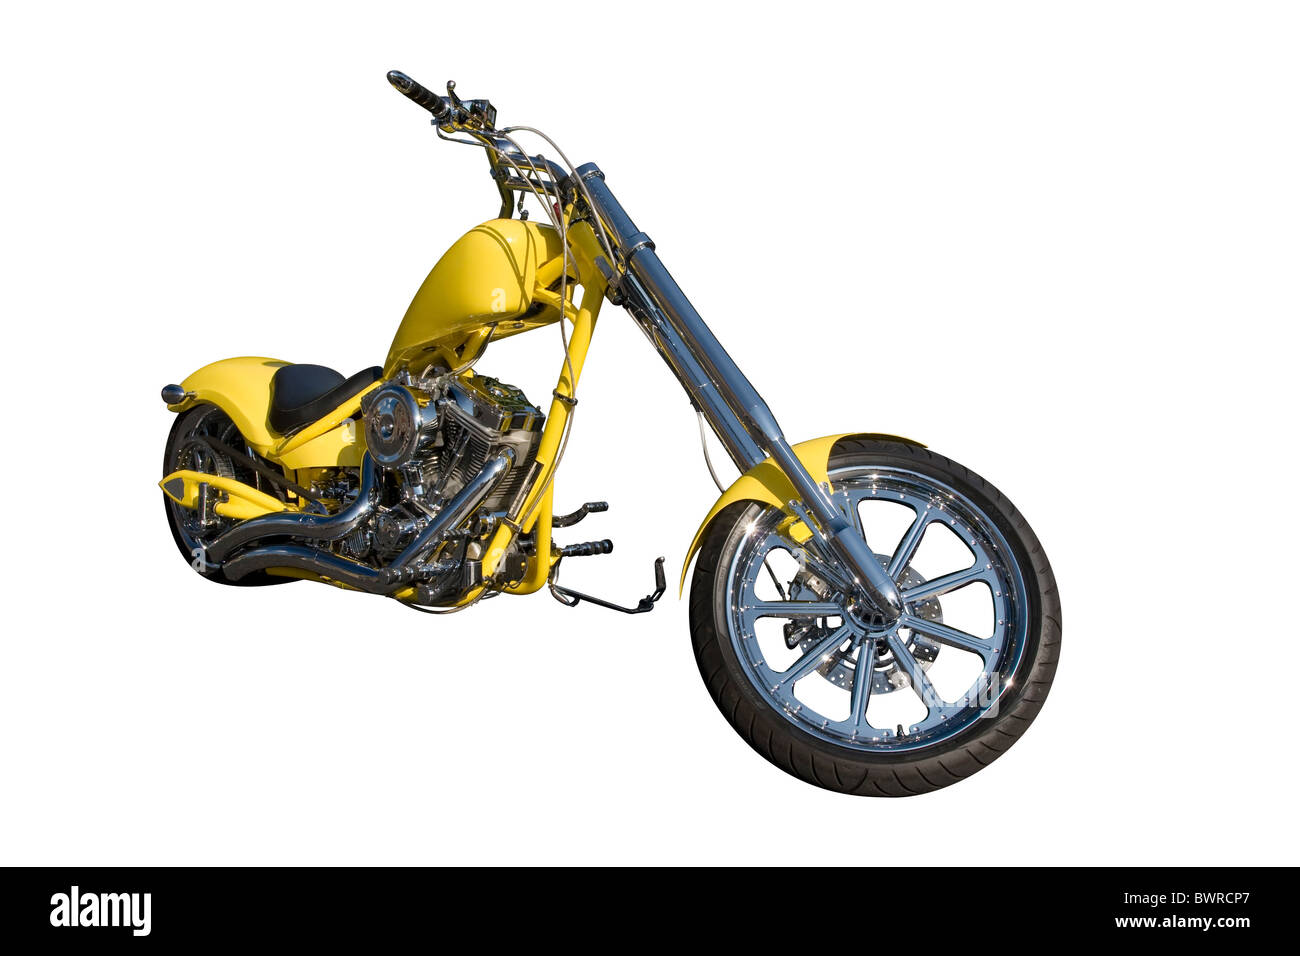 Customised Motorcycle Stockfotos und -bilder Kaufen - Alamy